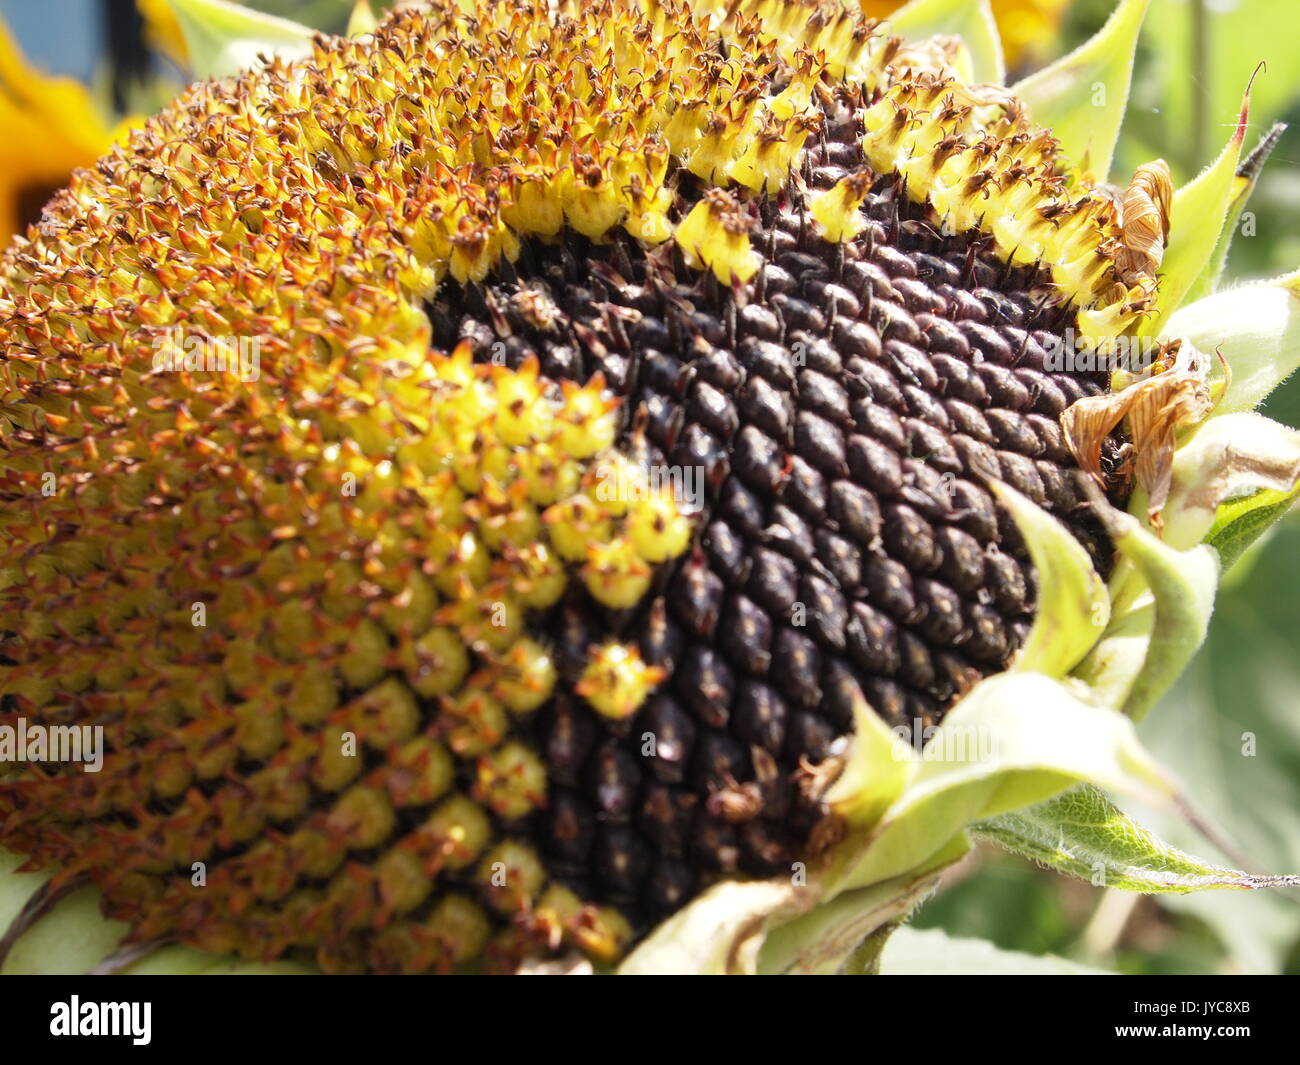 Black sunflower seeds ripen on the head of a sunflower, Ottawa, Ontario, Canada. Stock Photo